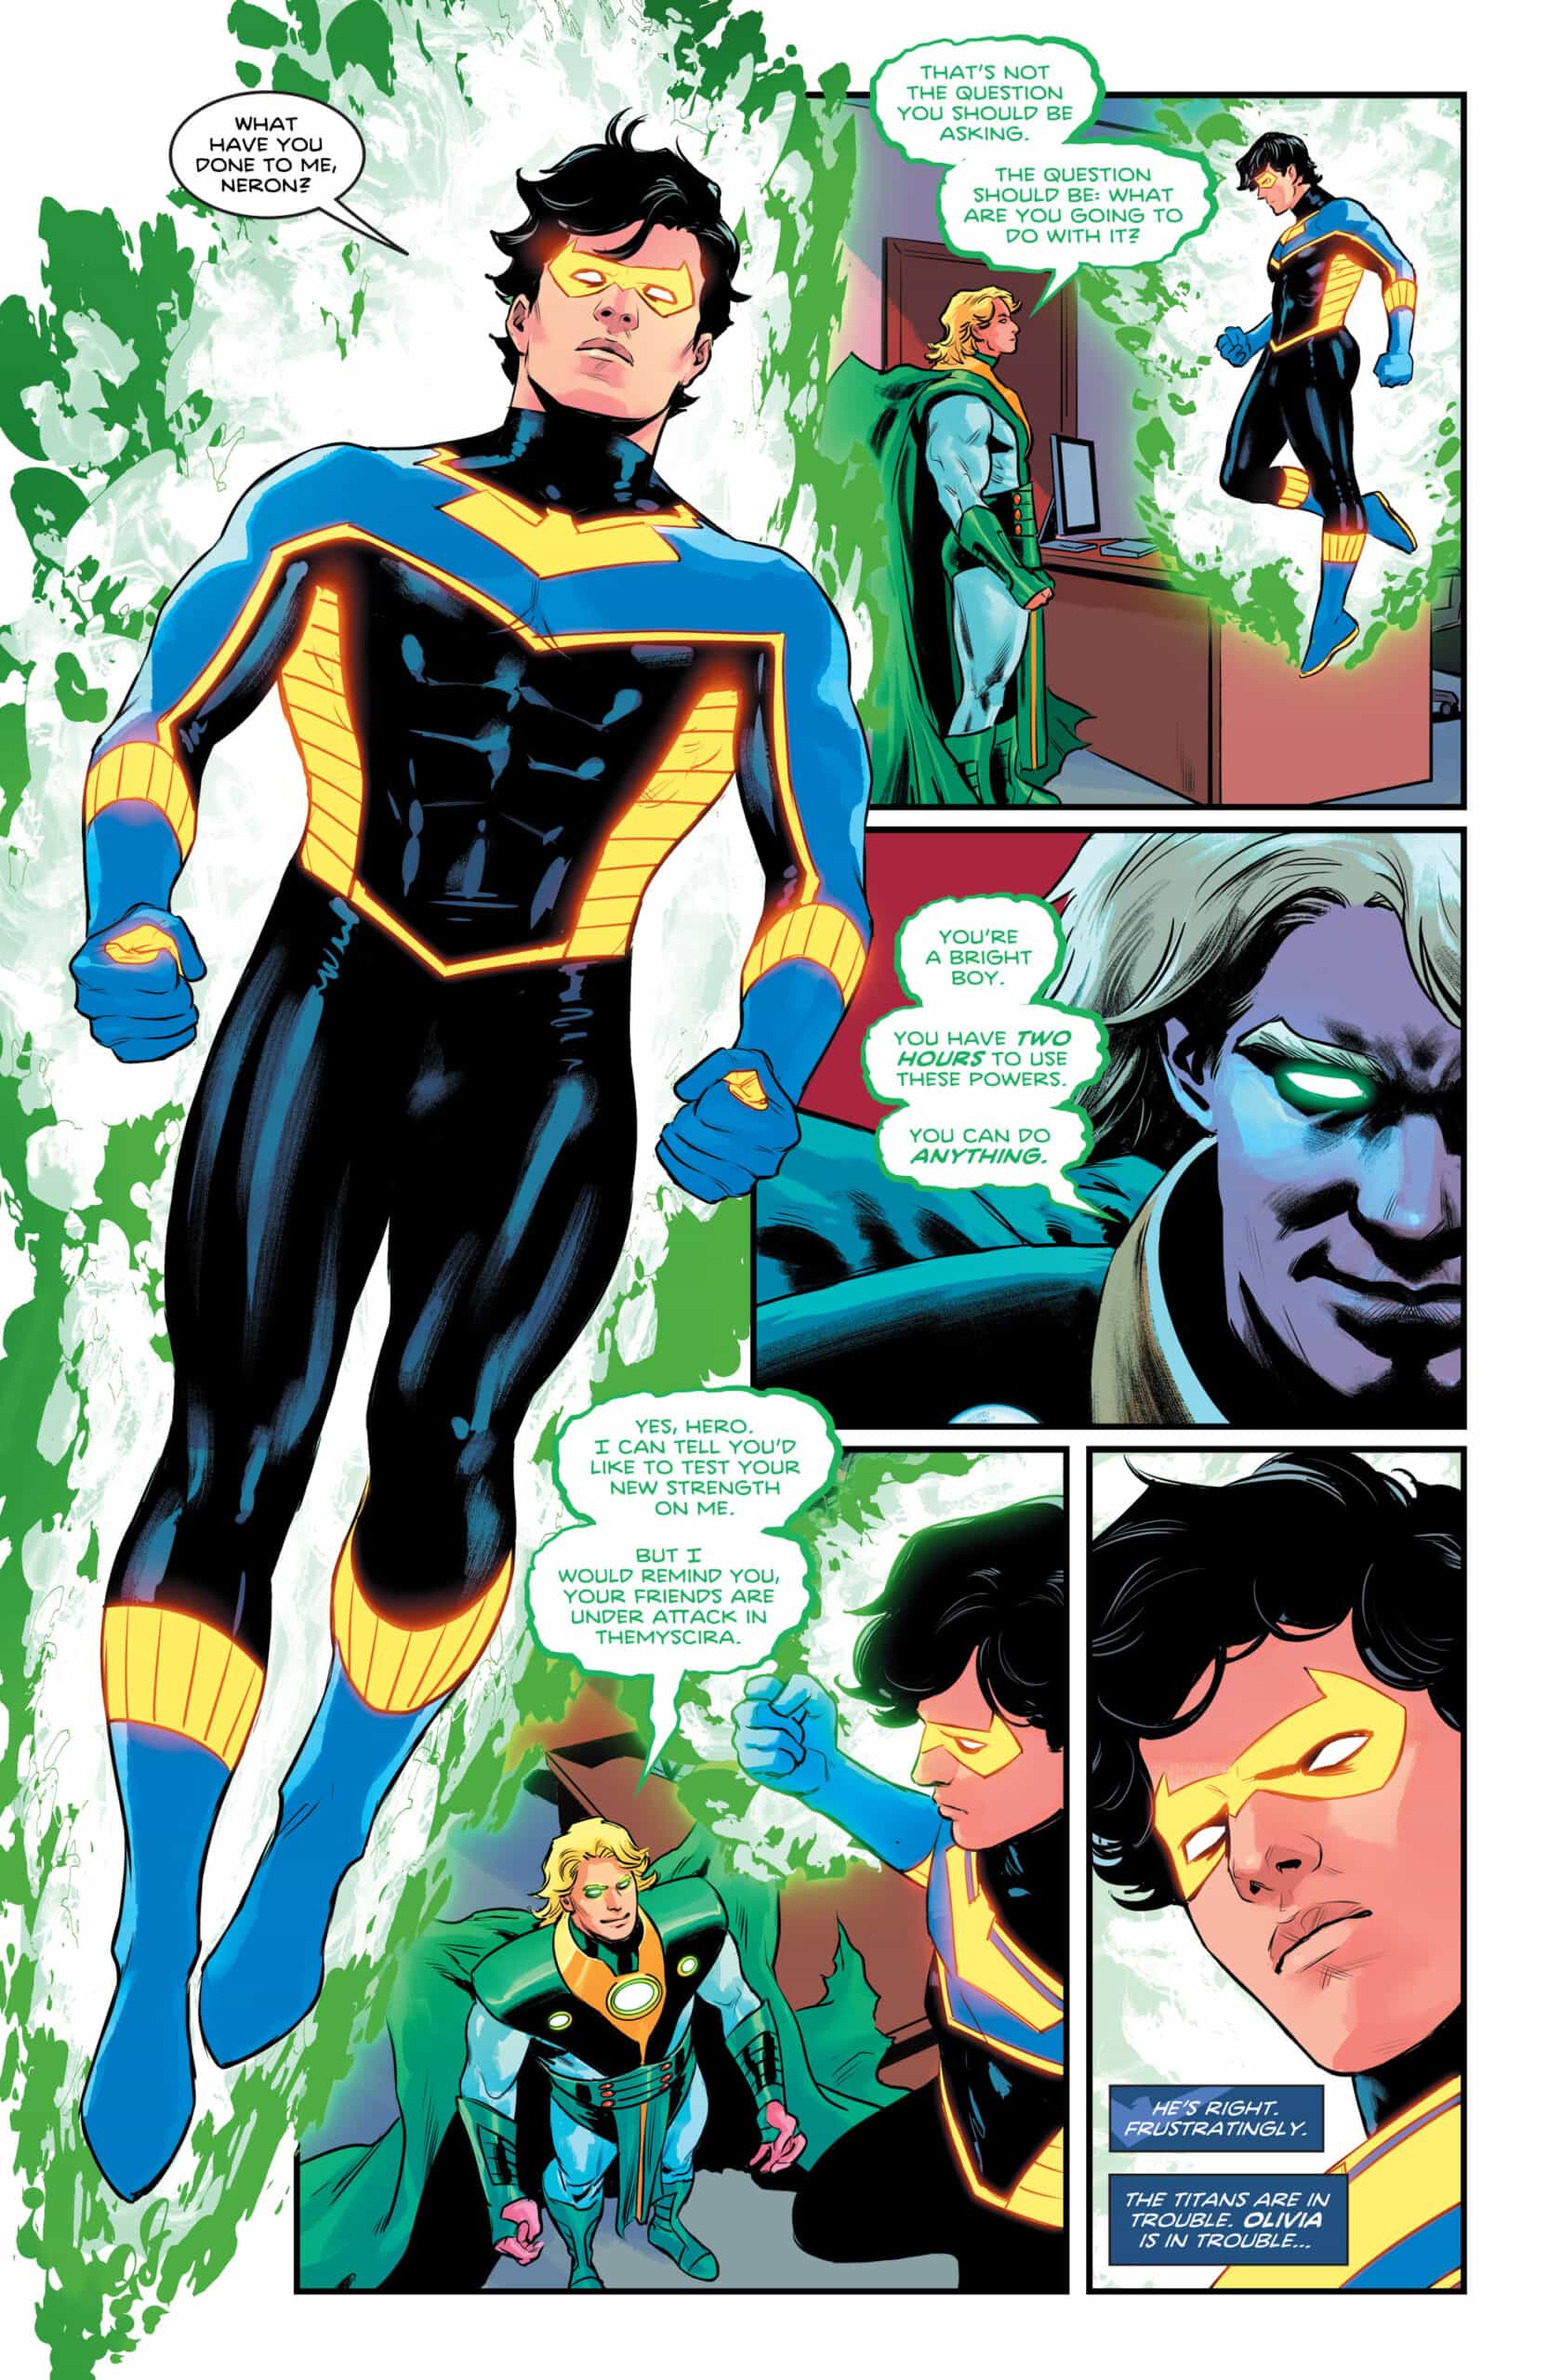 Nightwing #104: The Last Temptation of Grayson - Comic Watch